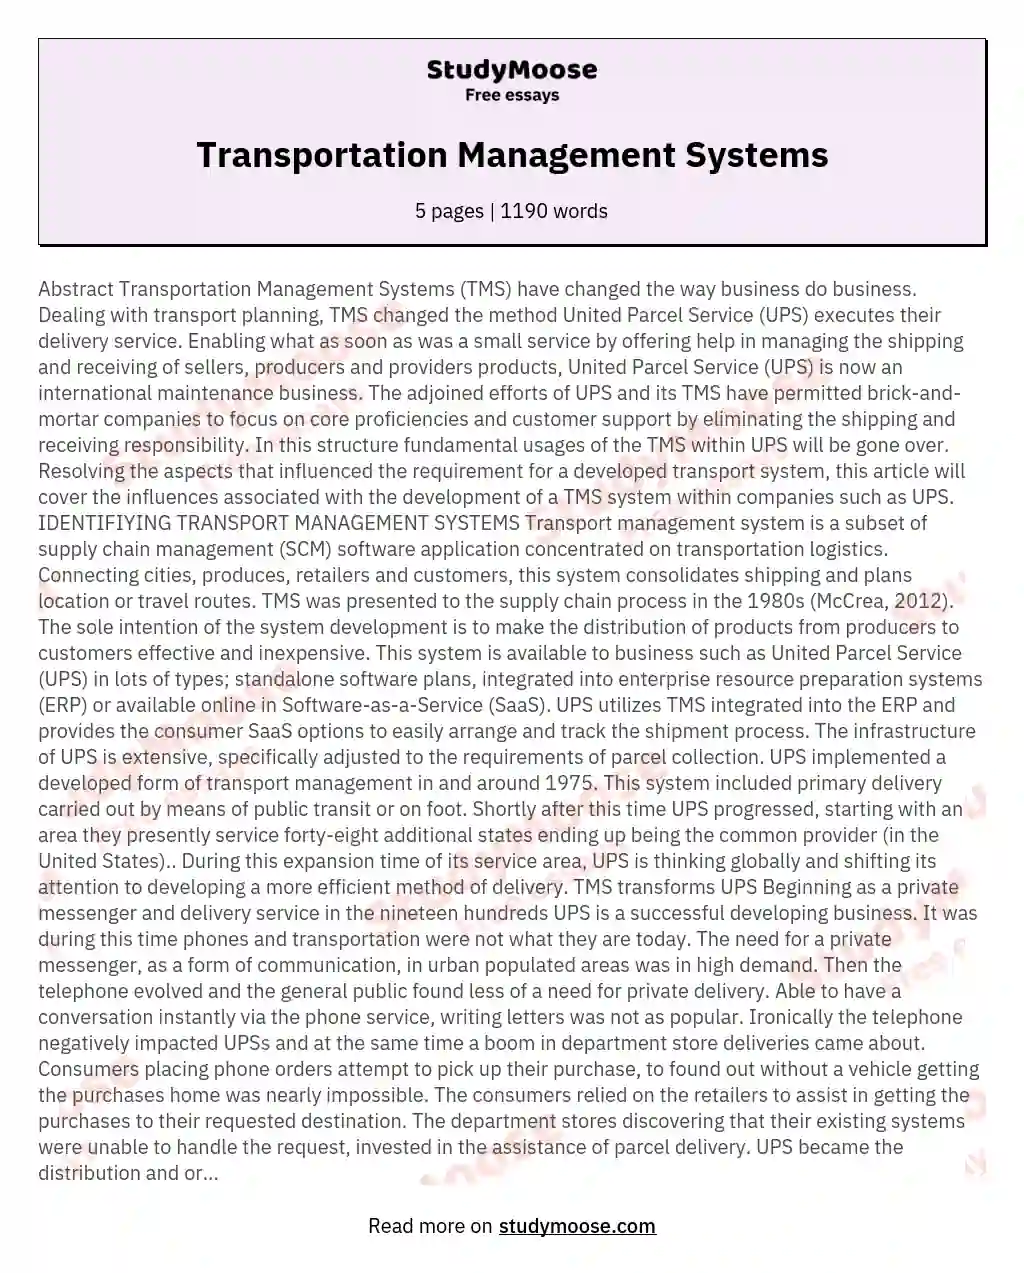 Transportation Management Systems essay